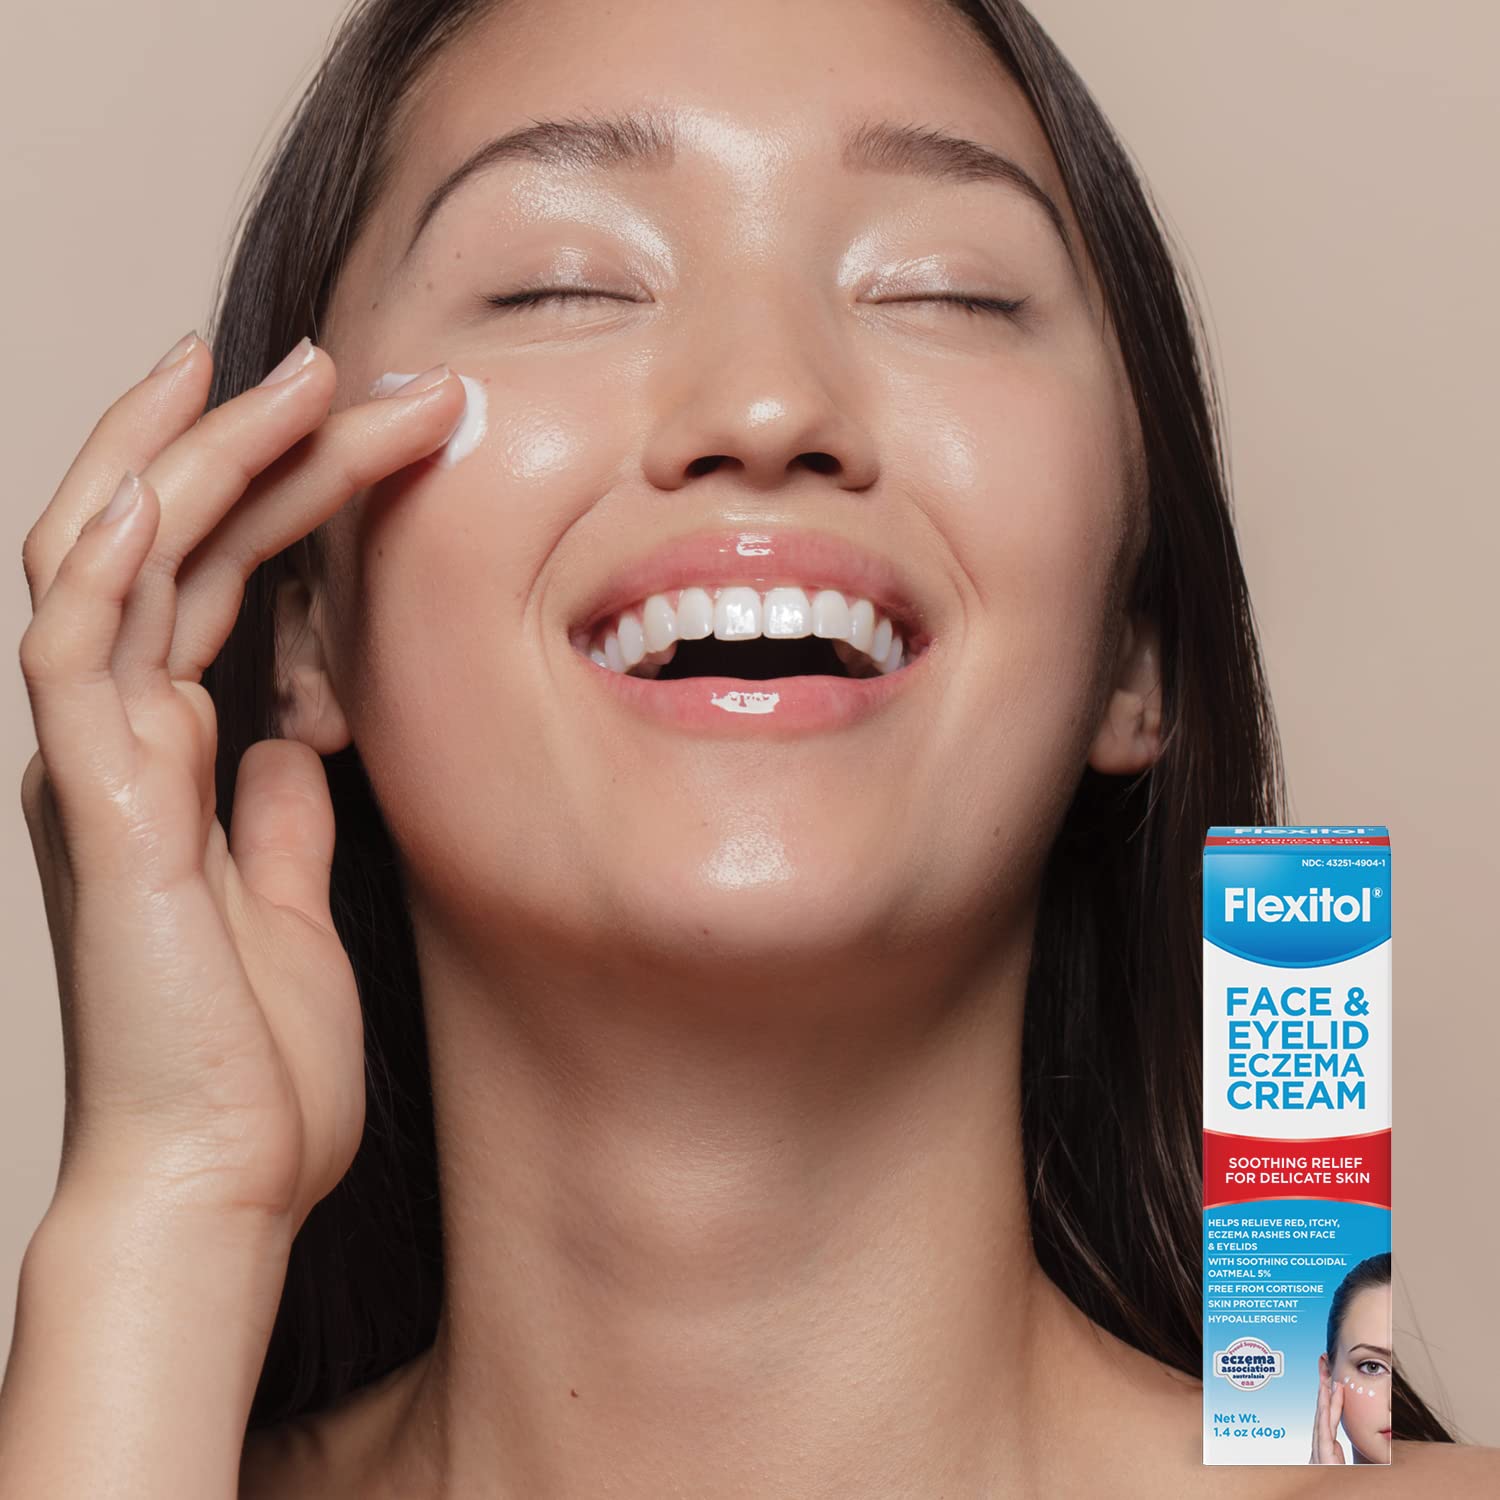 Flexitol USA Face & Eyelid Eczema Cream 40g / 1.4oz